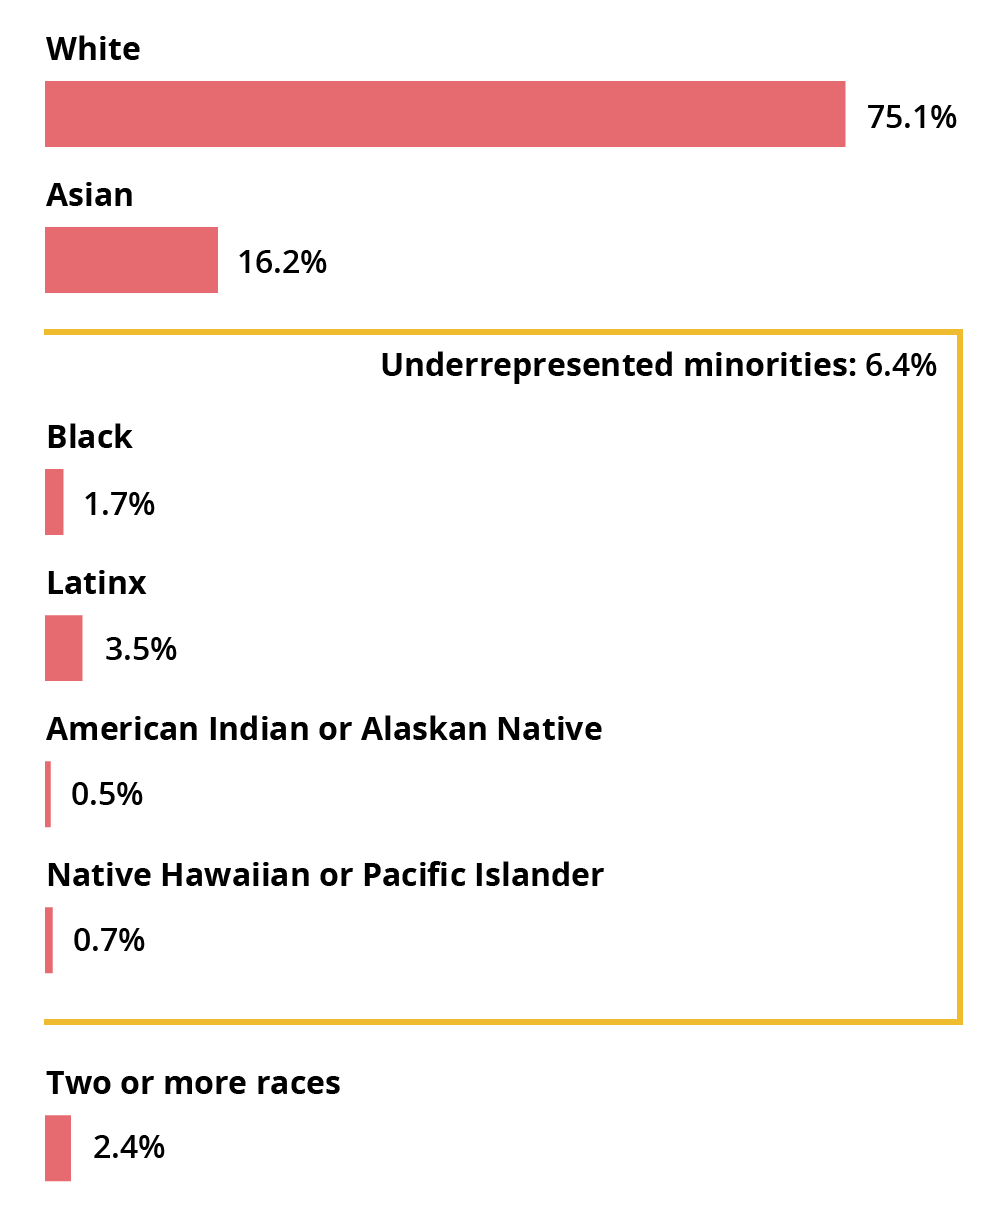 White: 75.1%, Asian: 16.2%, Black: 1.7%, Latinx: 3.5%, American Indian or Alaskan Native: 0.5%, Native Hawaiian or Pacific Islander: 0.7%, Two or more races: 2.4%. Underrepresented minorities total: 6.4%.